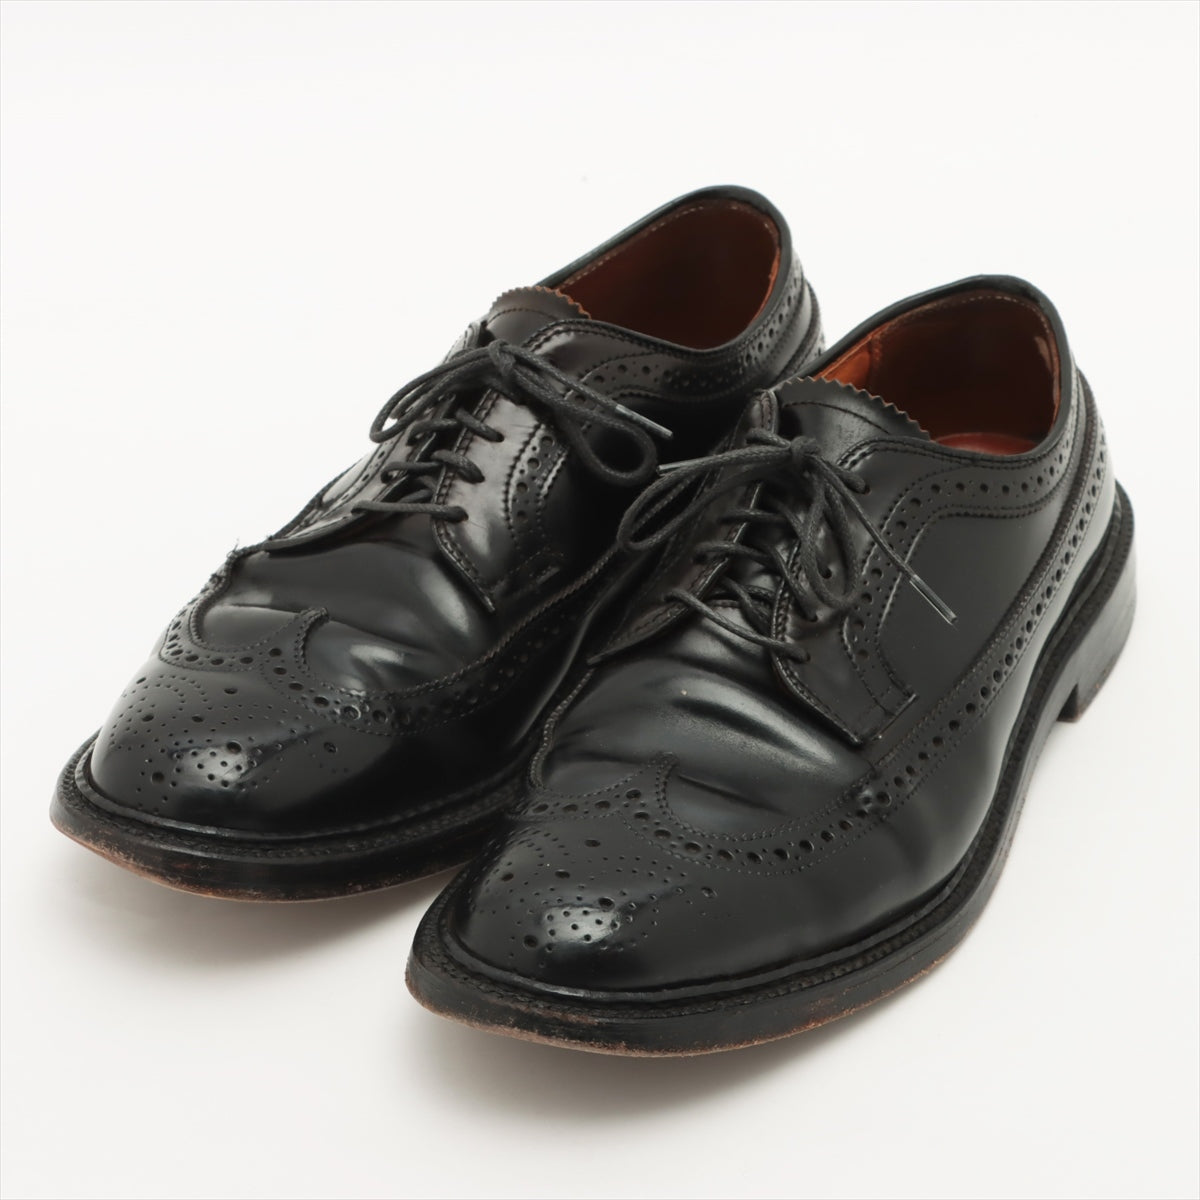 Alden Leather Leather shoes 8 Men's Black 9751